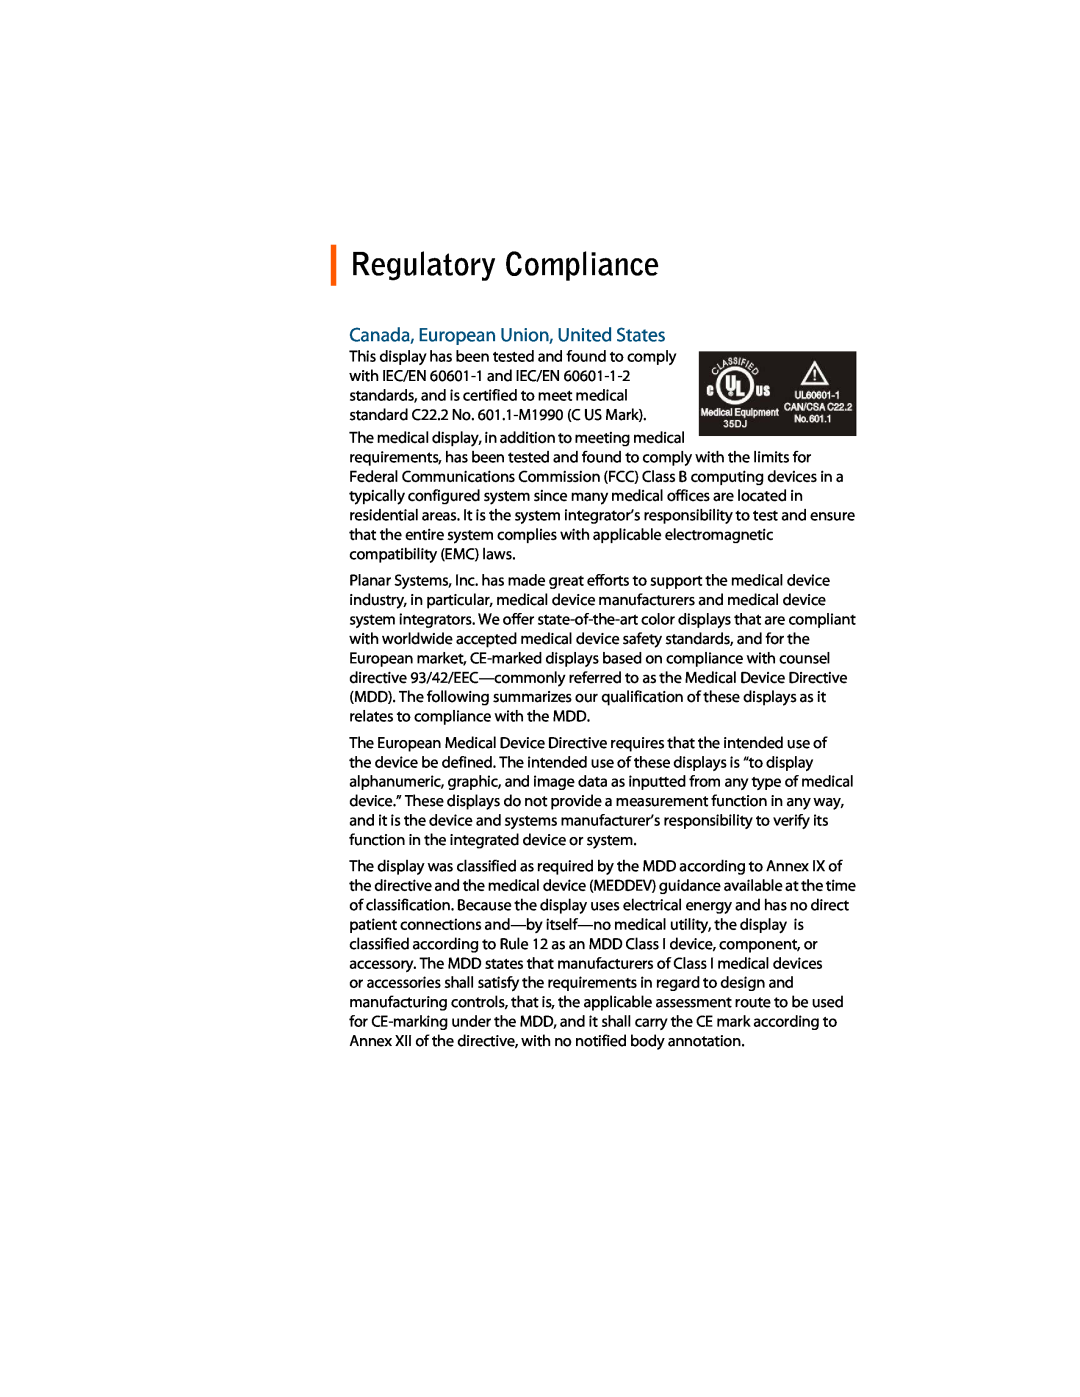 Planar E2c Display manual Regulatory Compliance, Canada, European Union, United States 